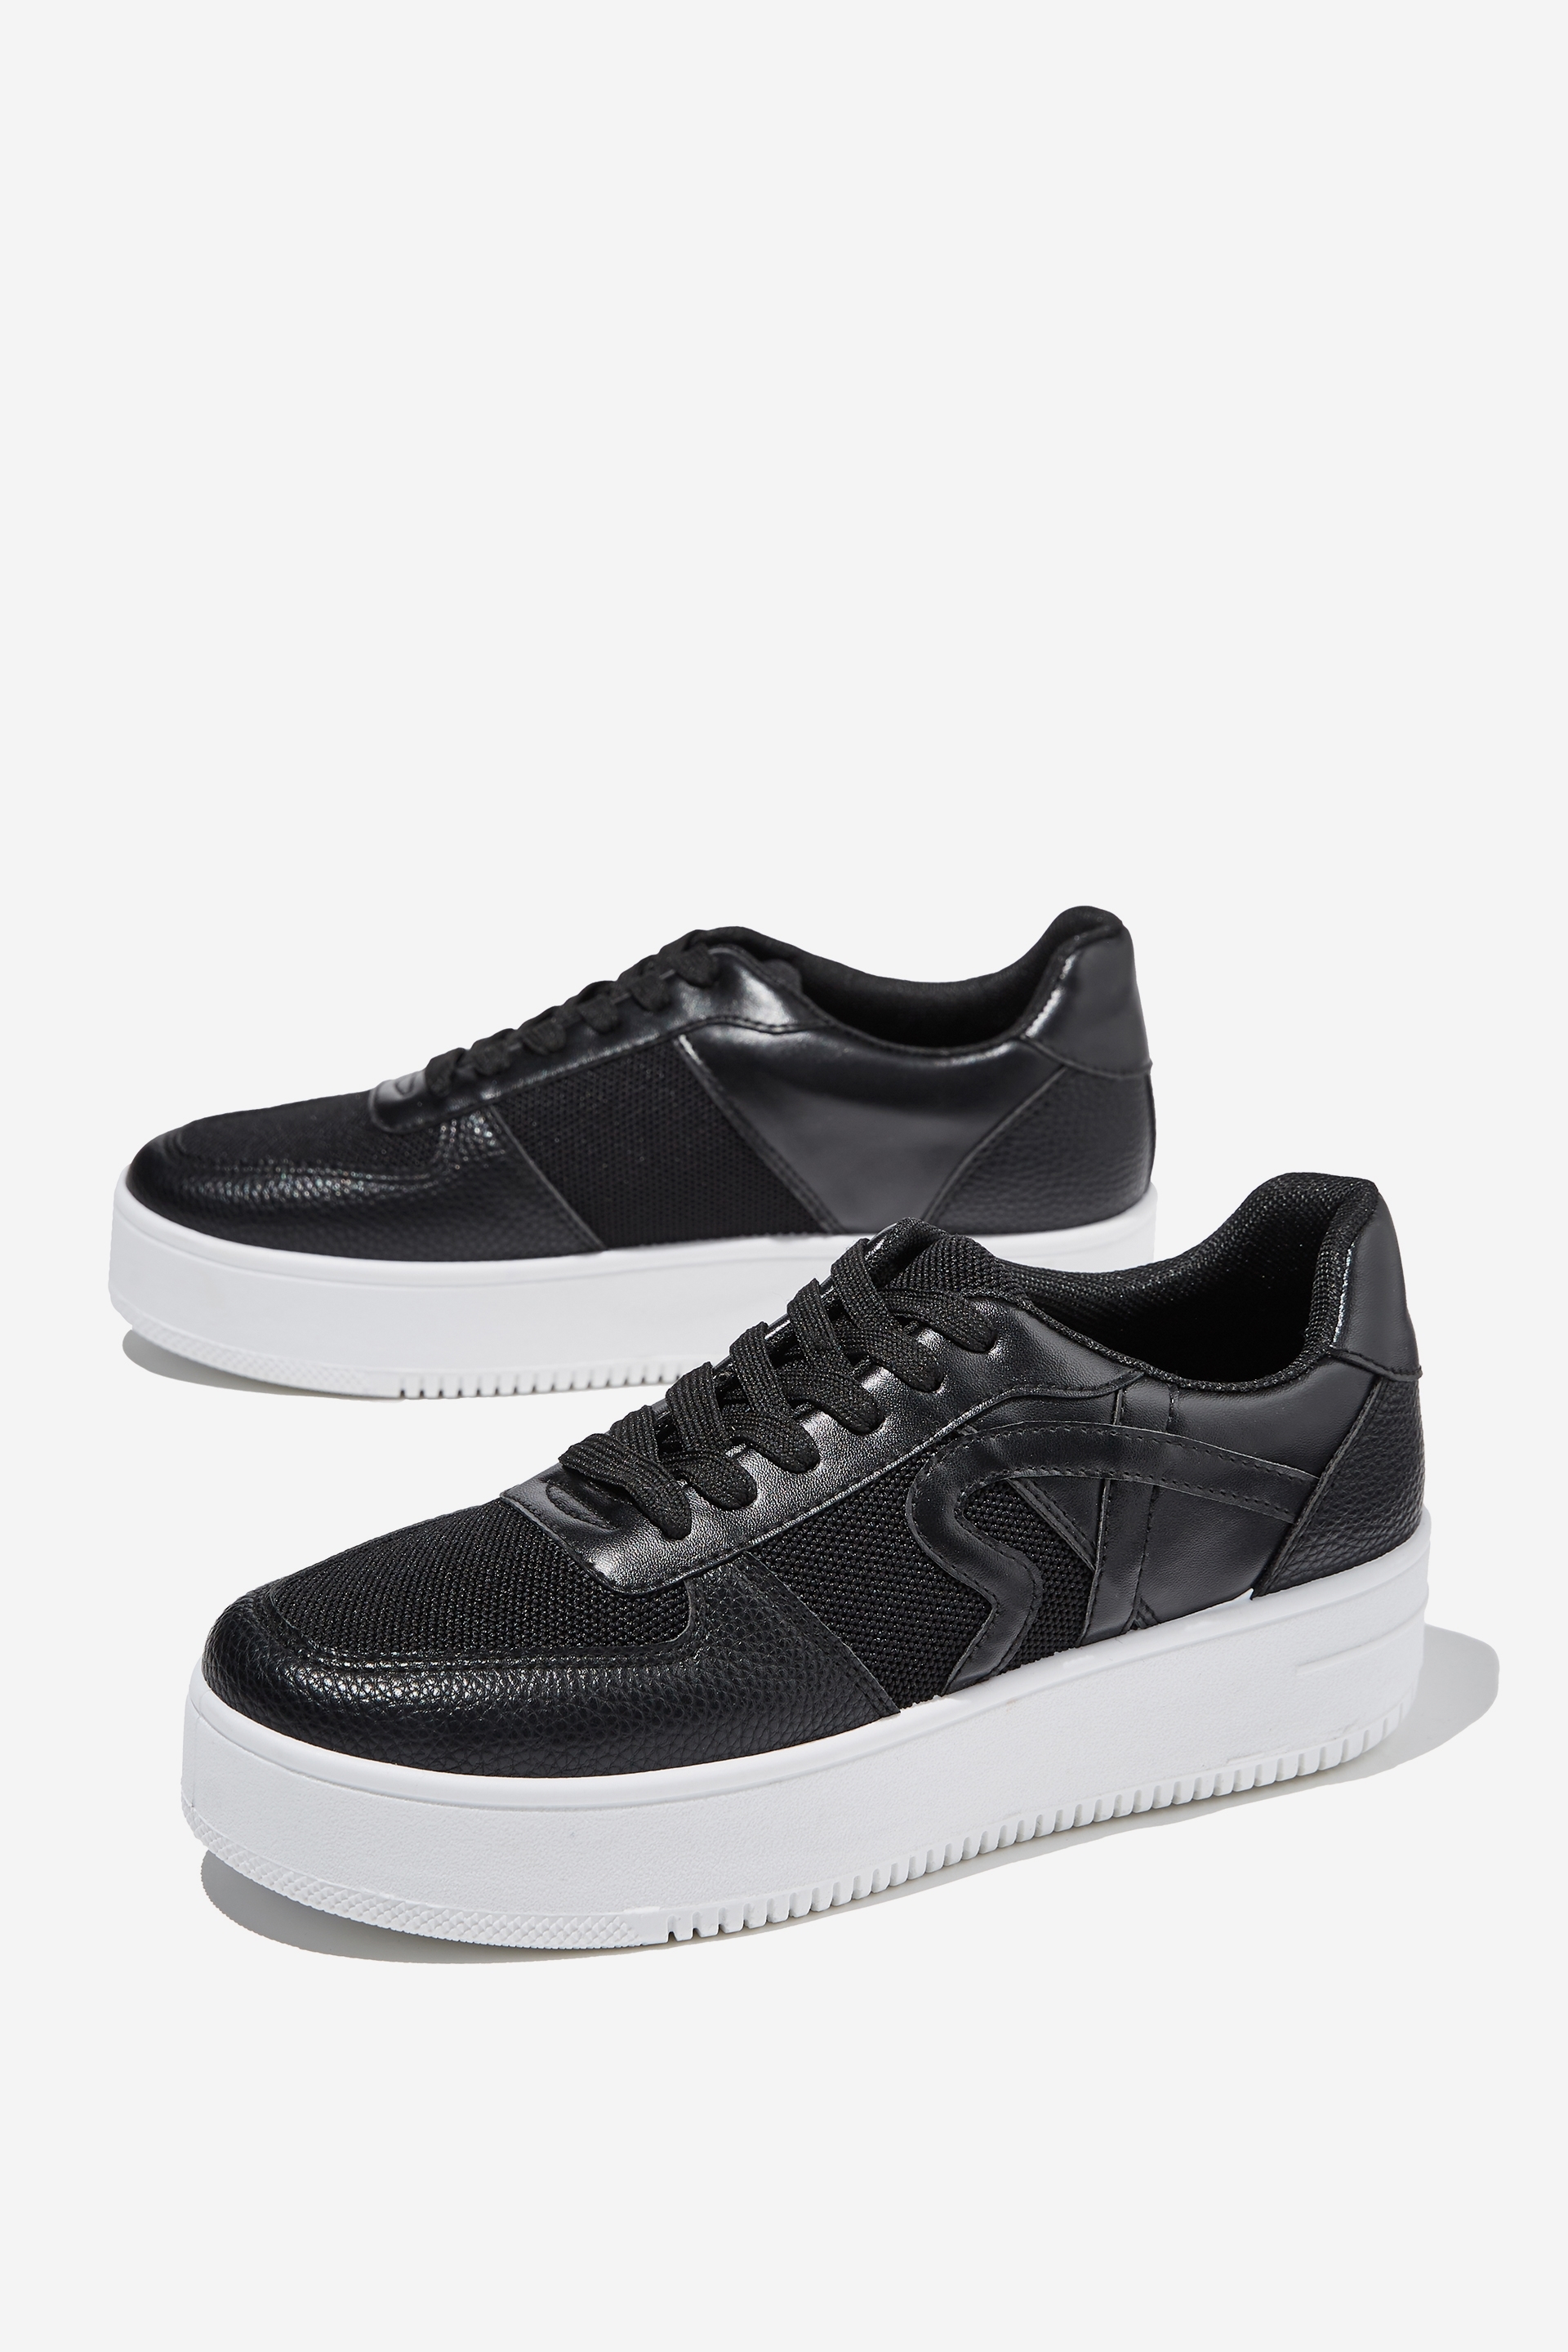 Rubi - Lexi Platform Sneaker - Black multi